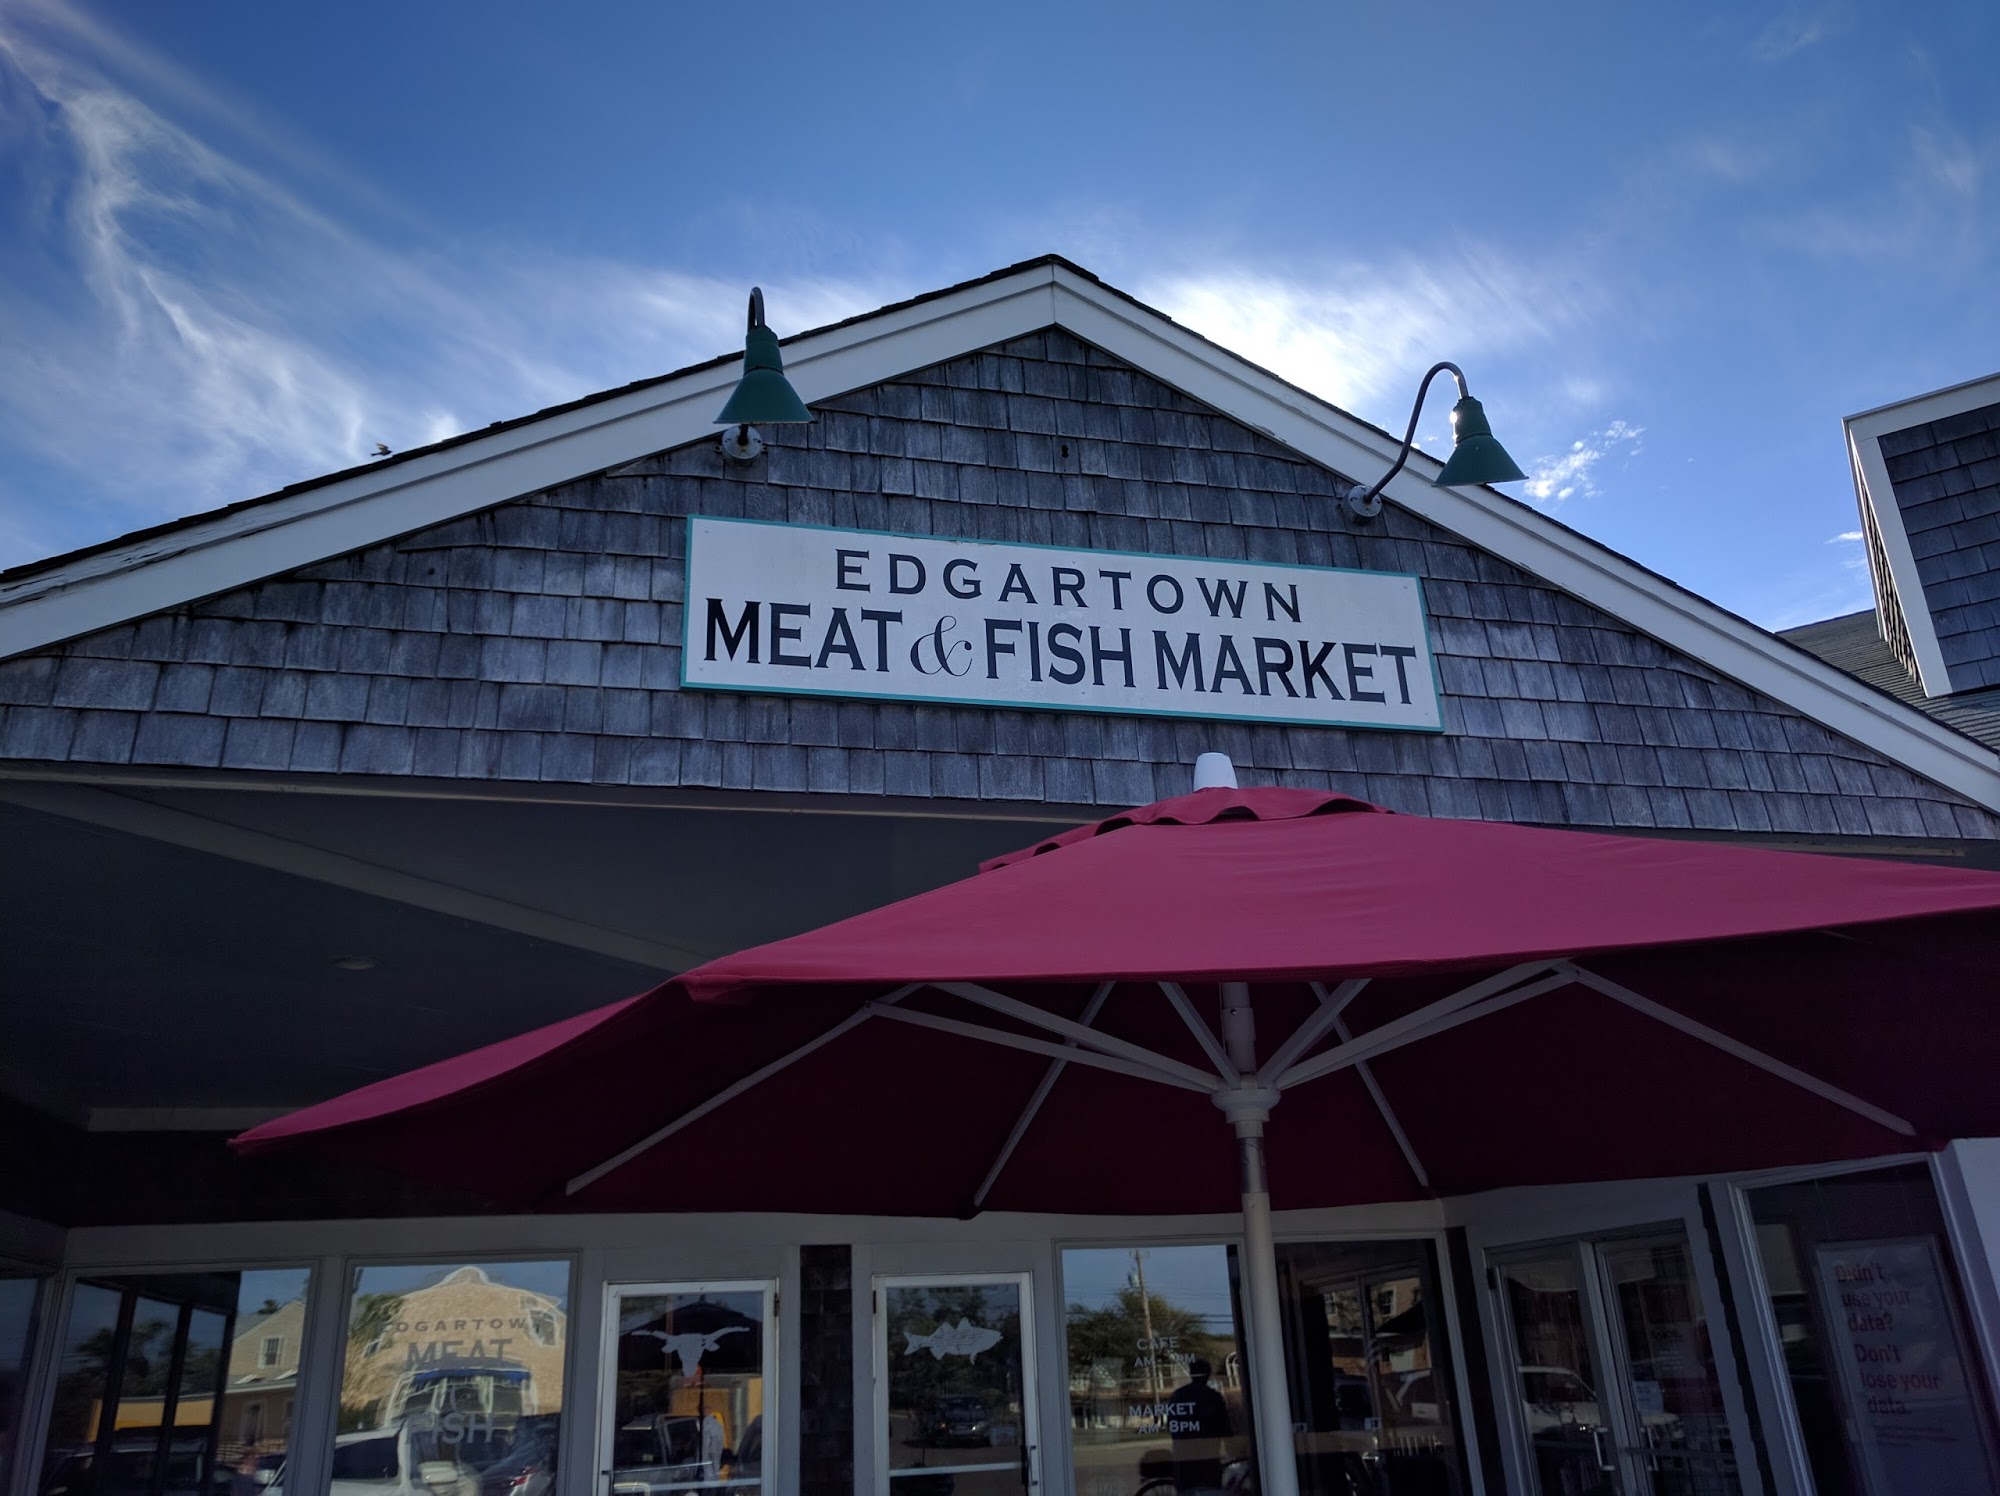 Edgartown Meat & Fish Market